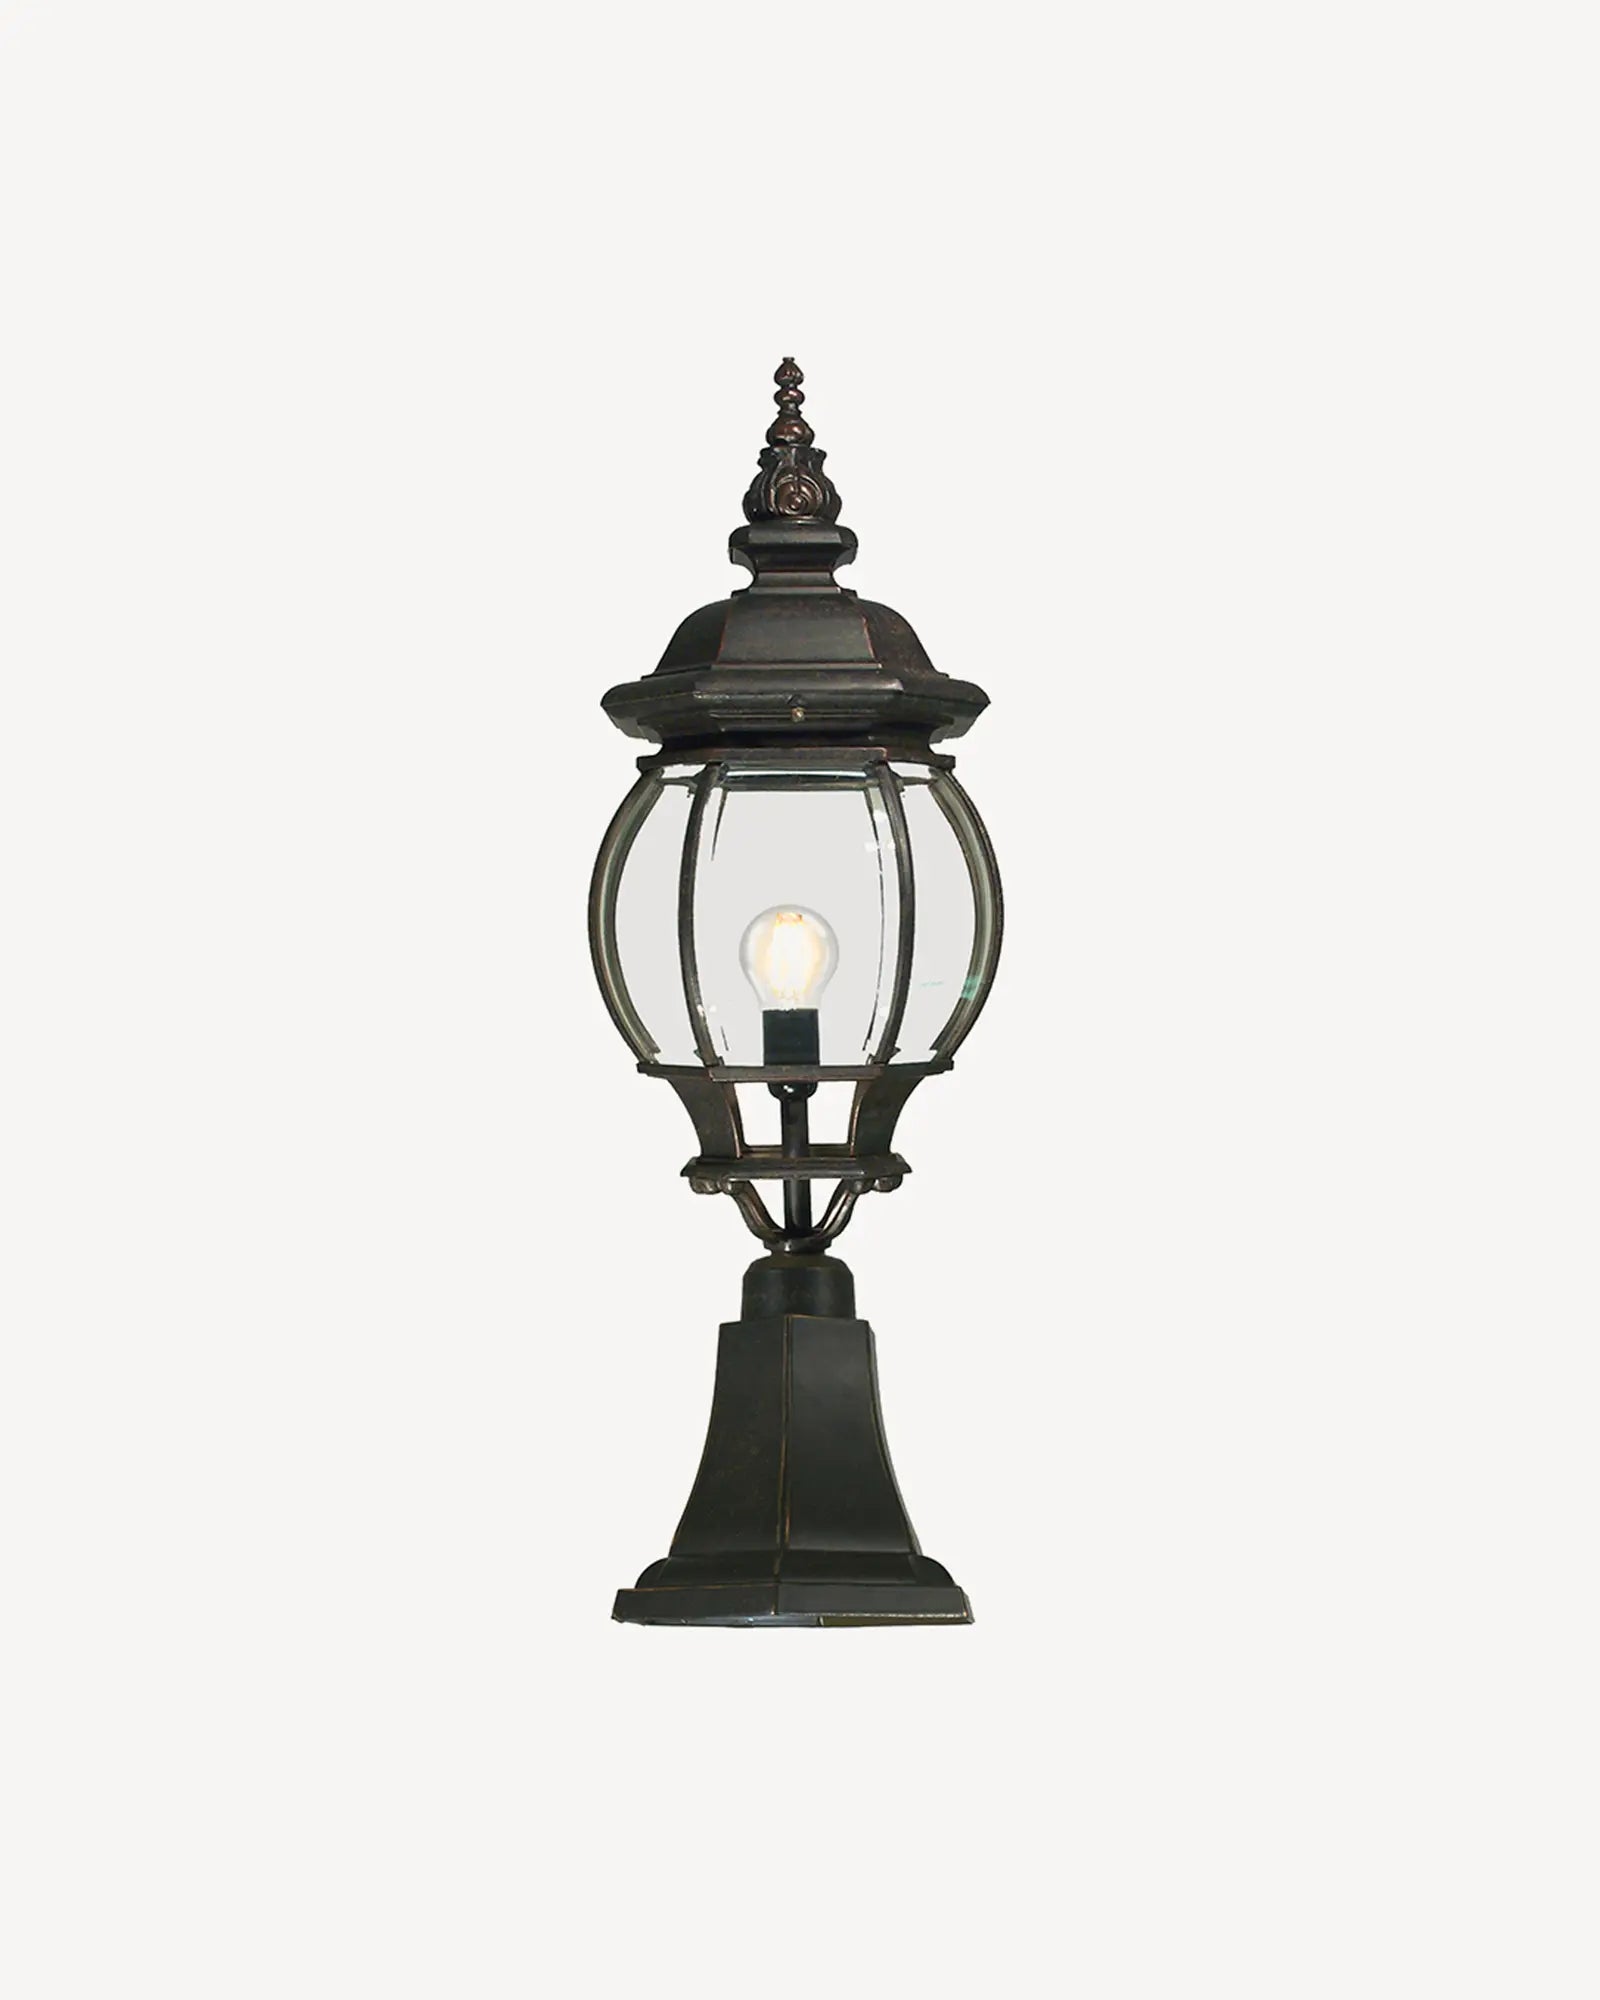 Flinders Pedestal light by Inspiration Light at Nook Collections